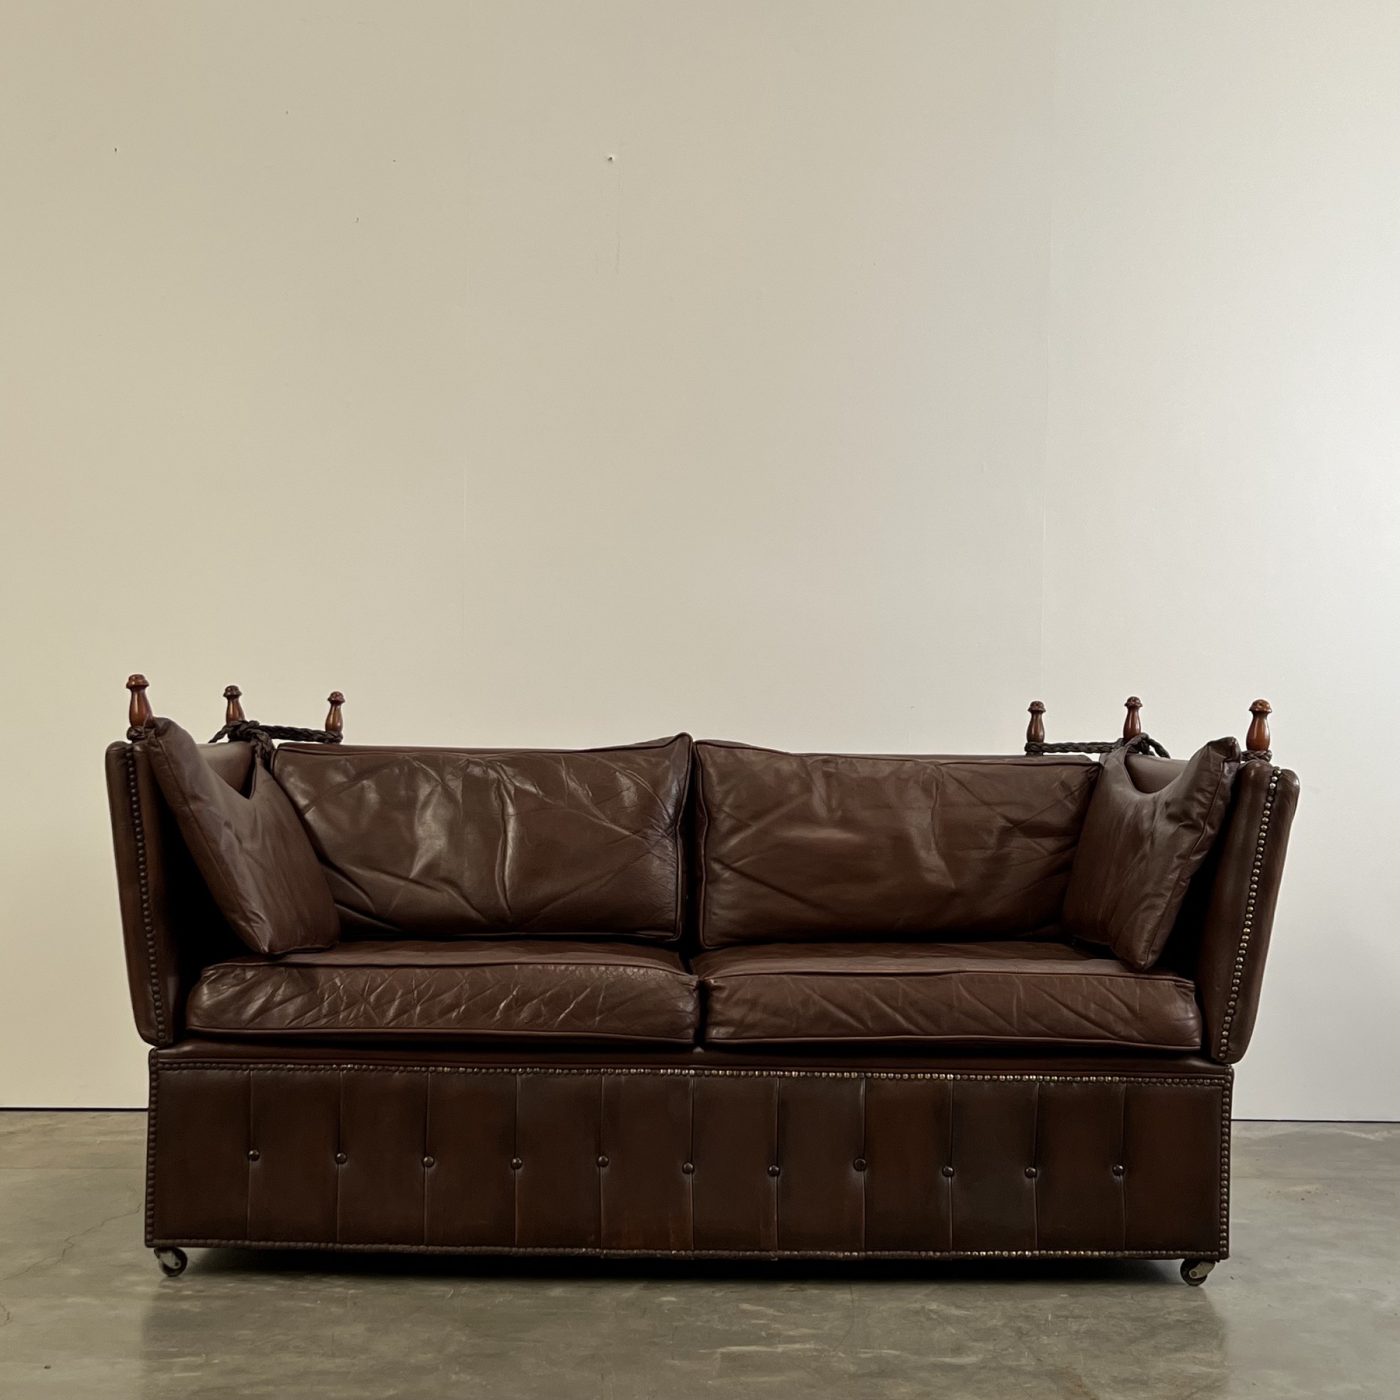 objet-vagabond-leather-sofa0008